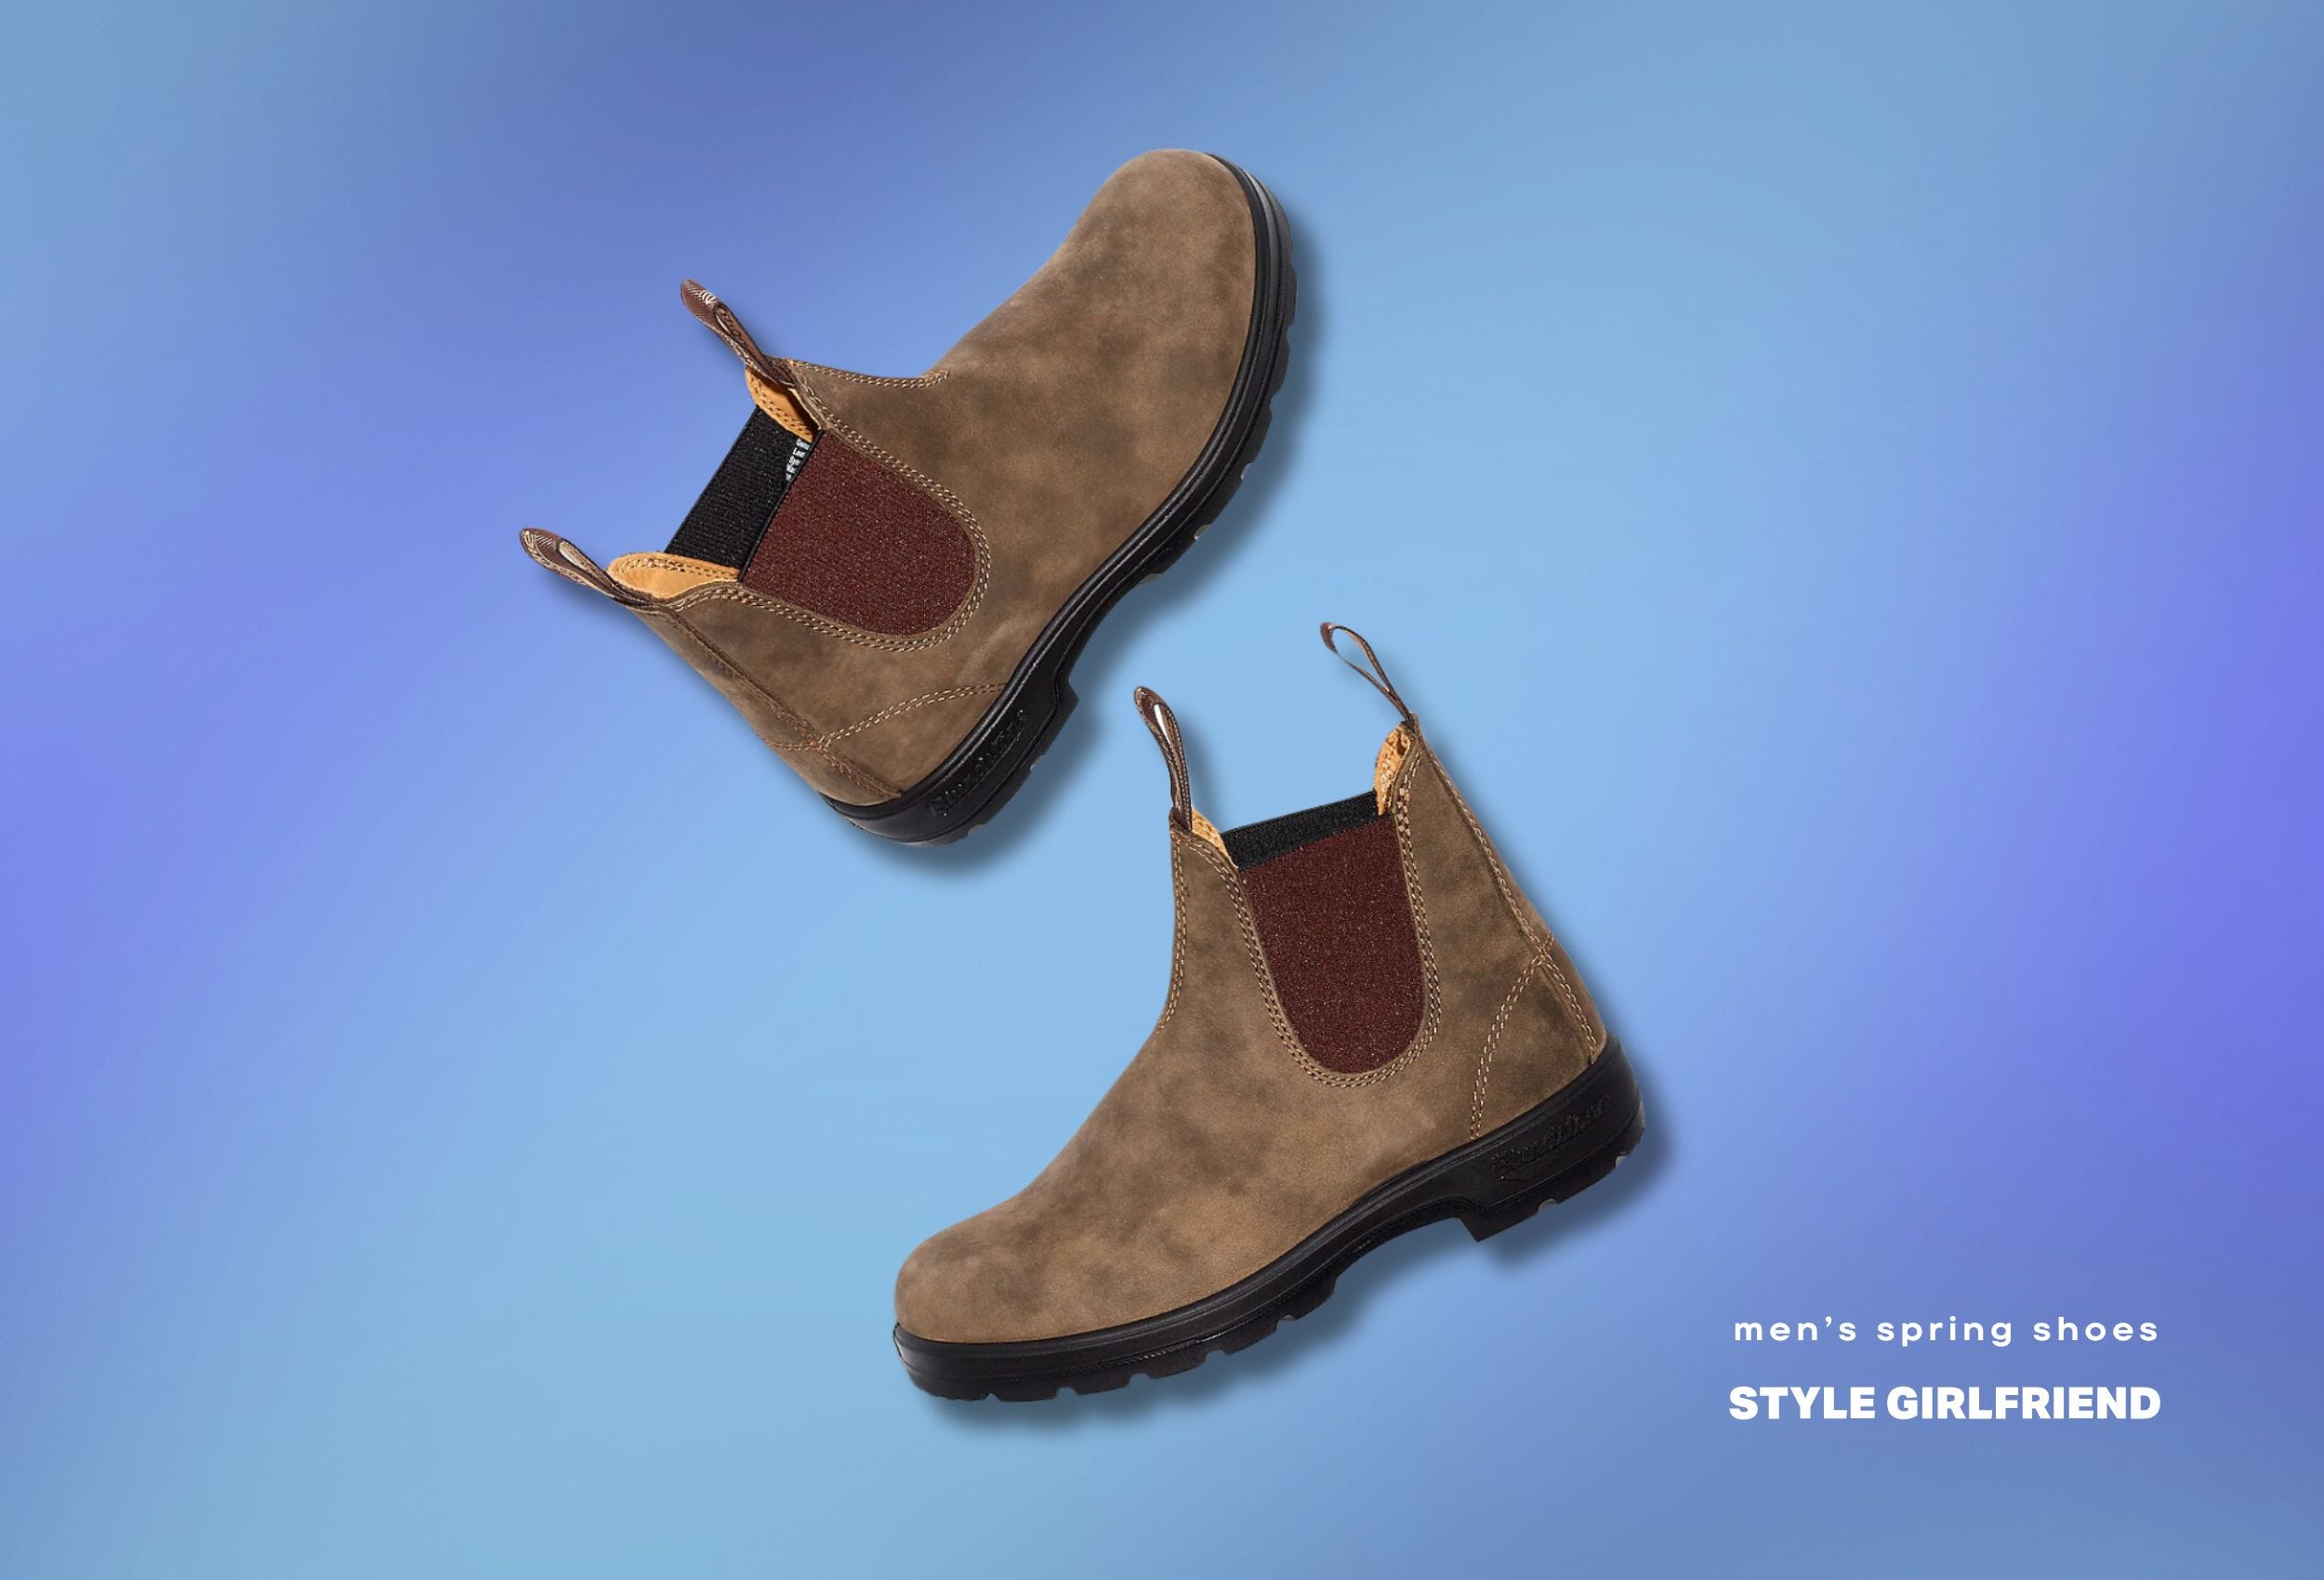 blundstone Men's Classic Chelsea Boots in rustic brown